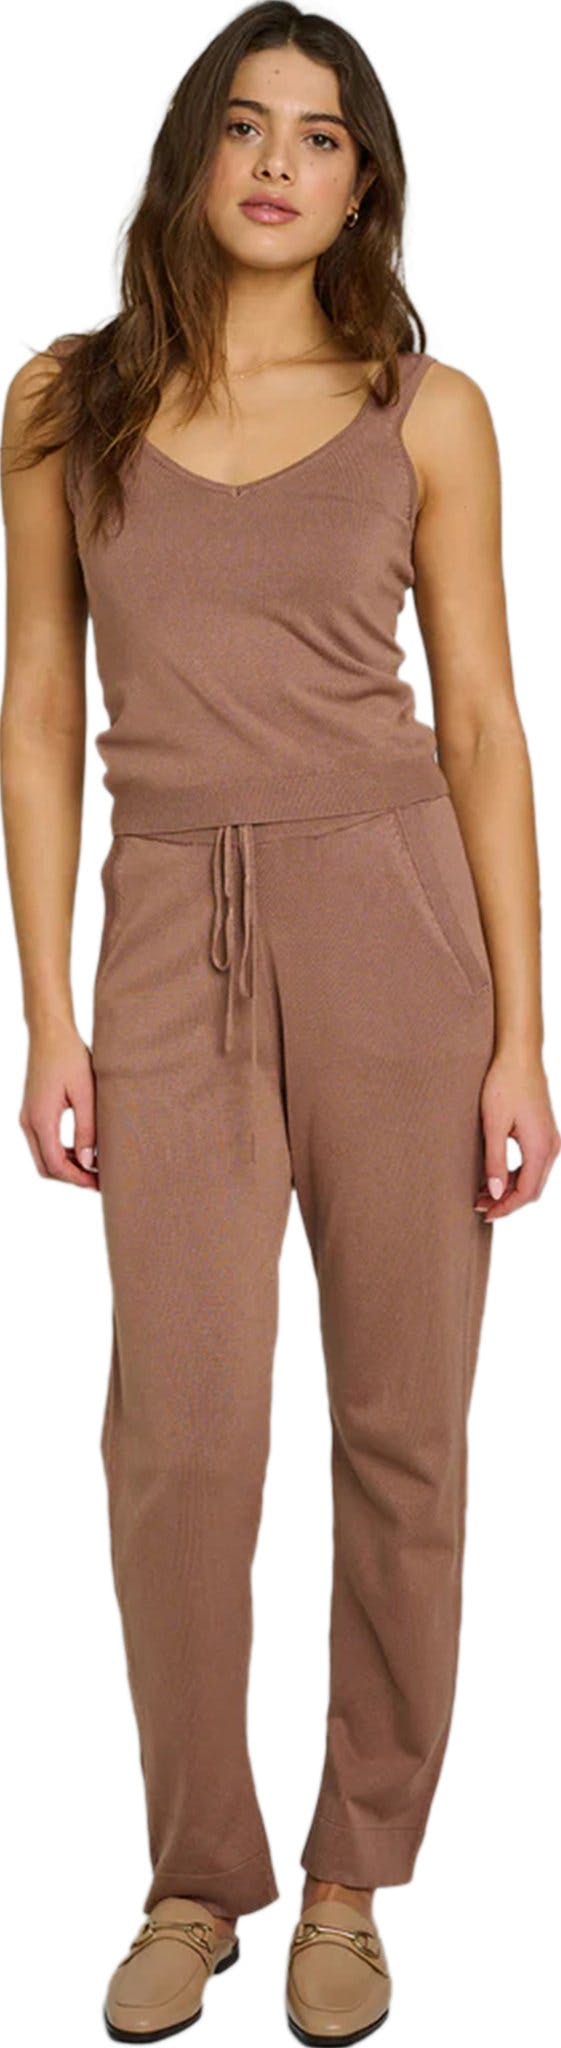 Product image for Lounge Split Pants - Women's